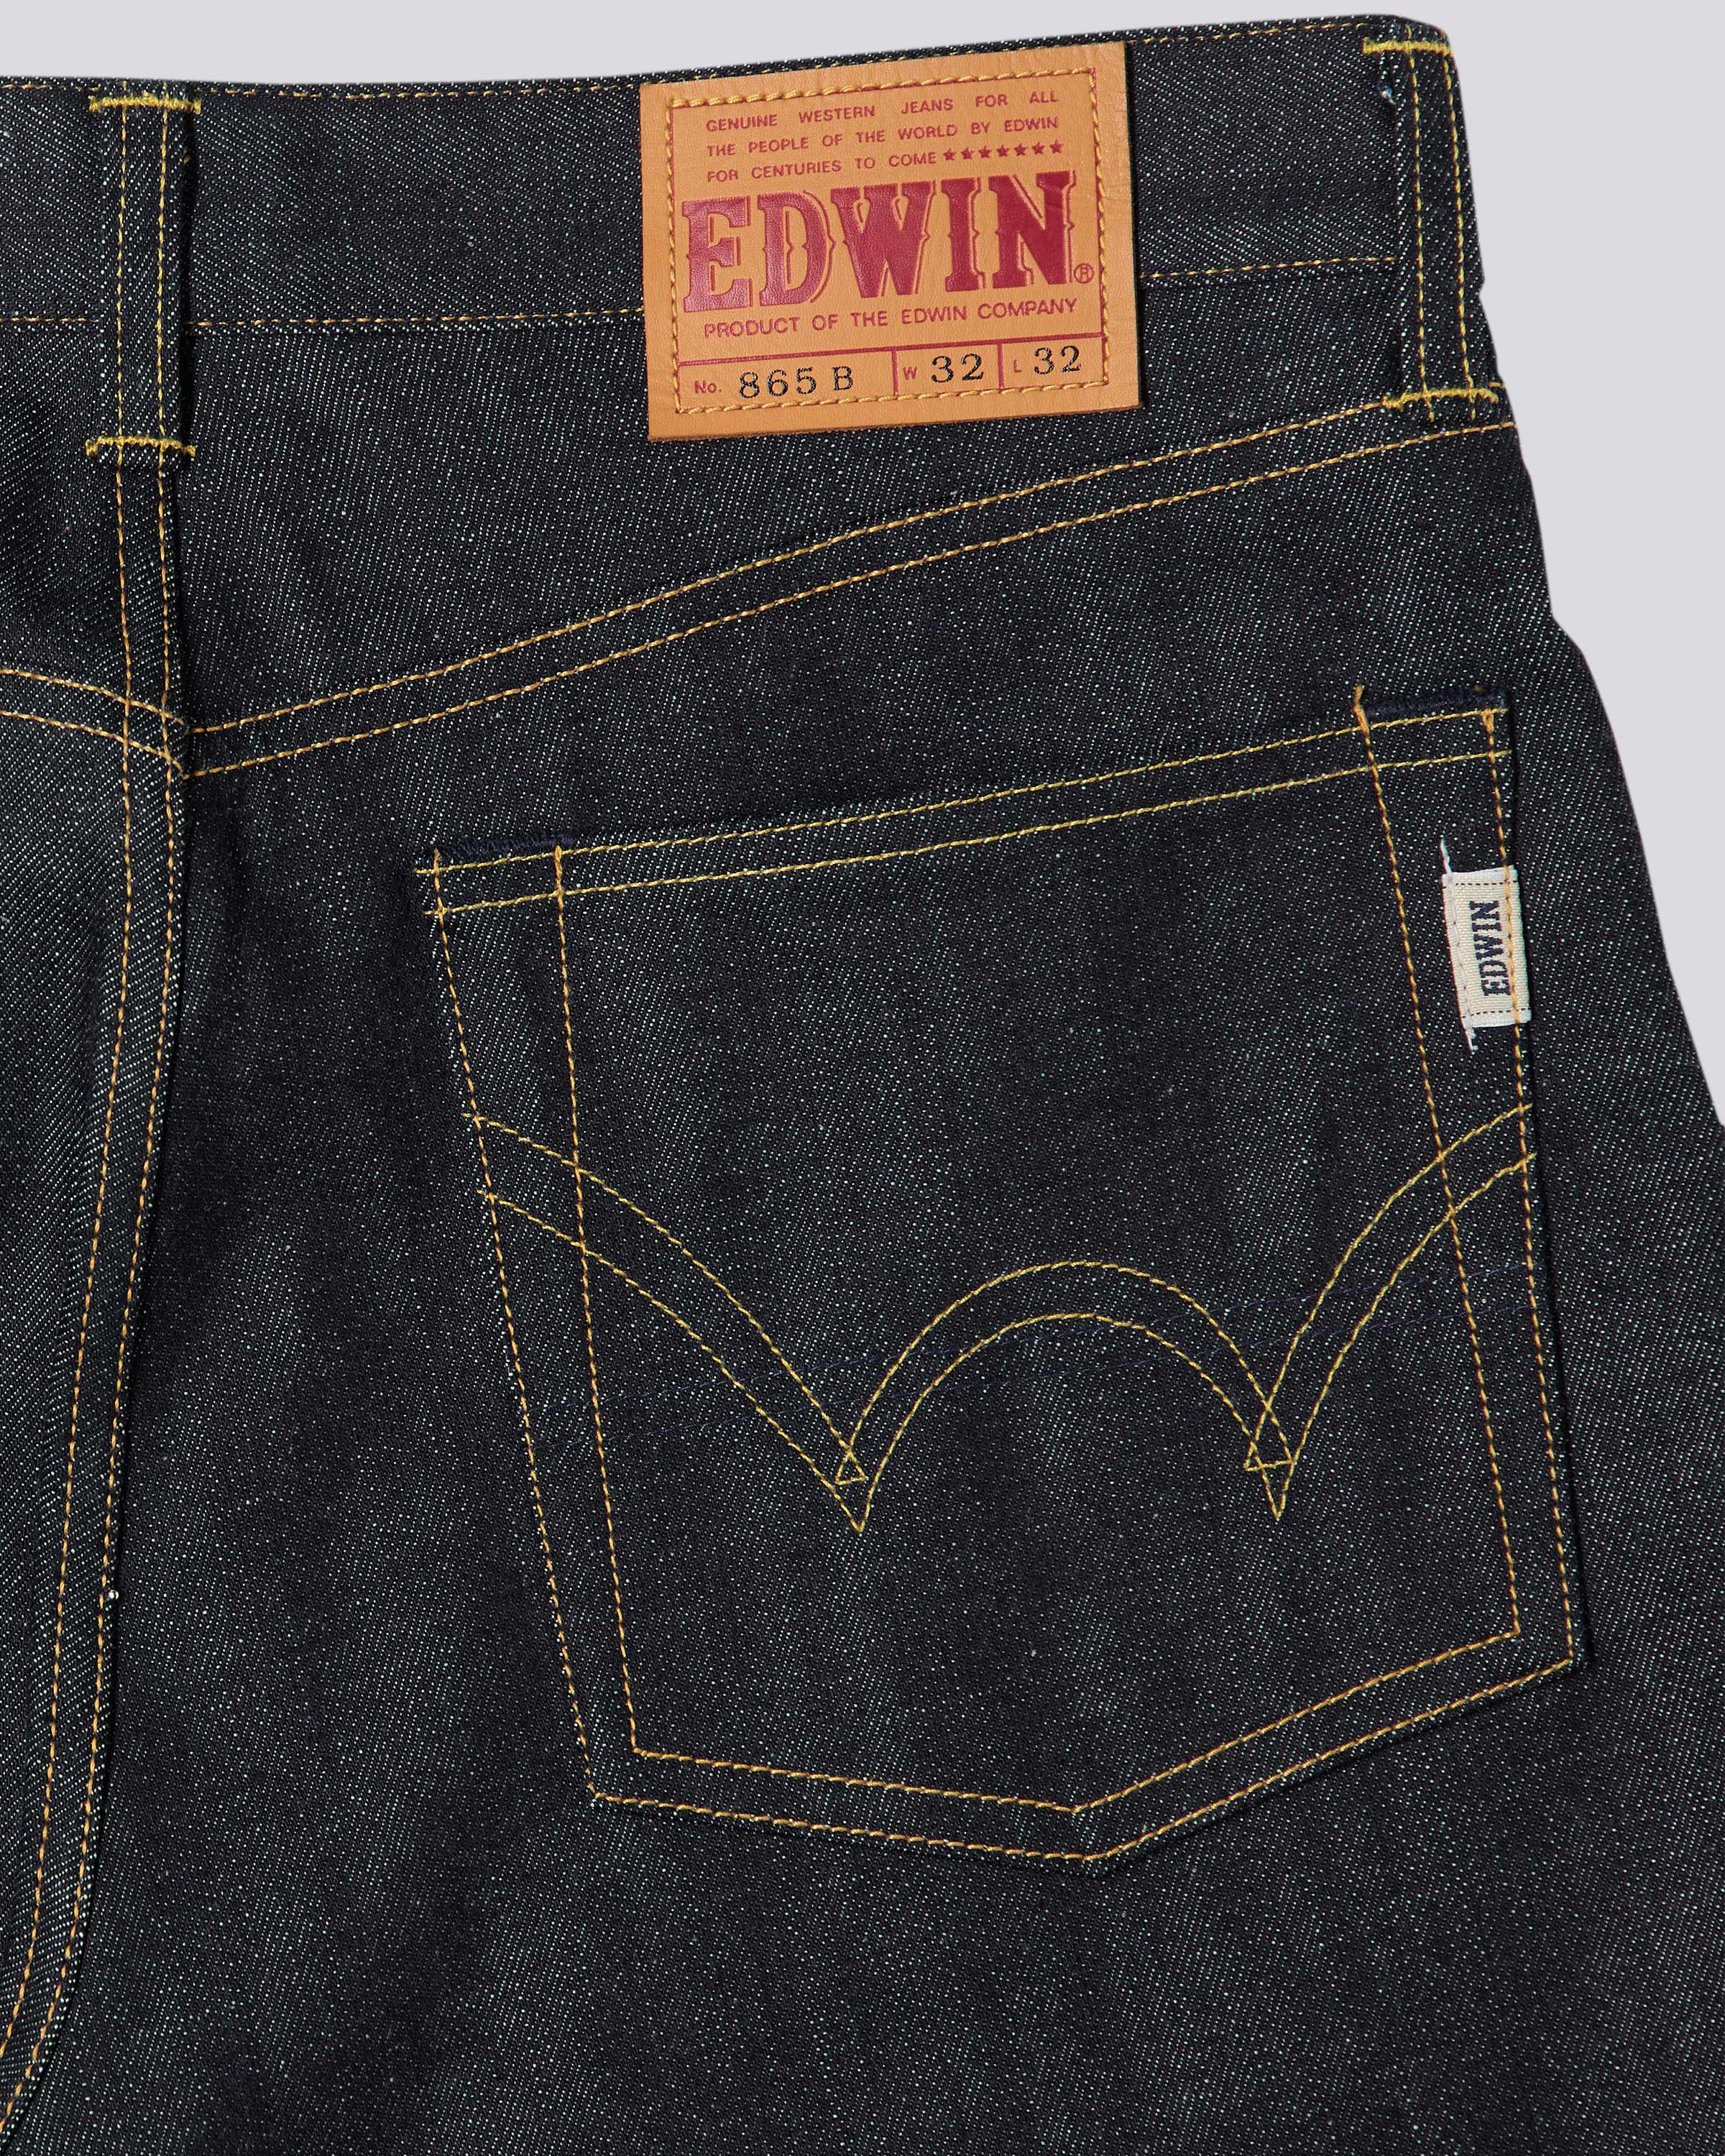 edwin jeans stockists